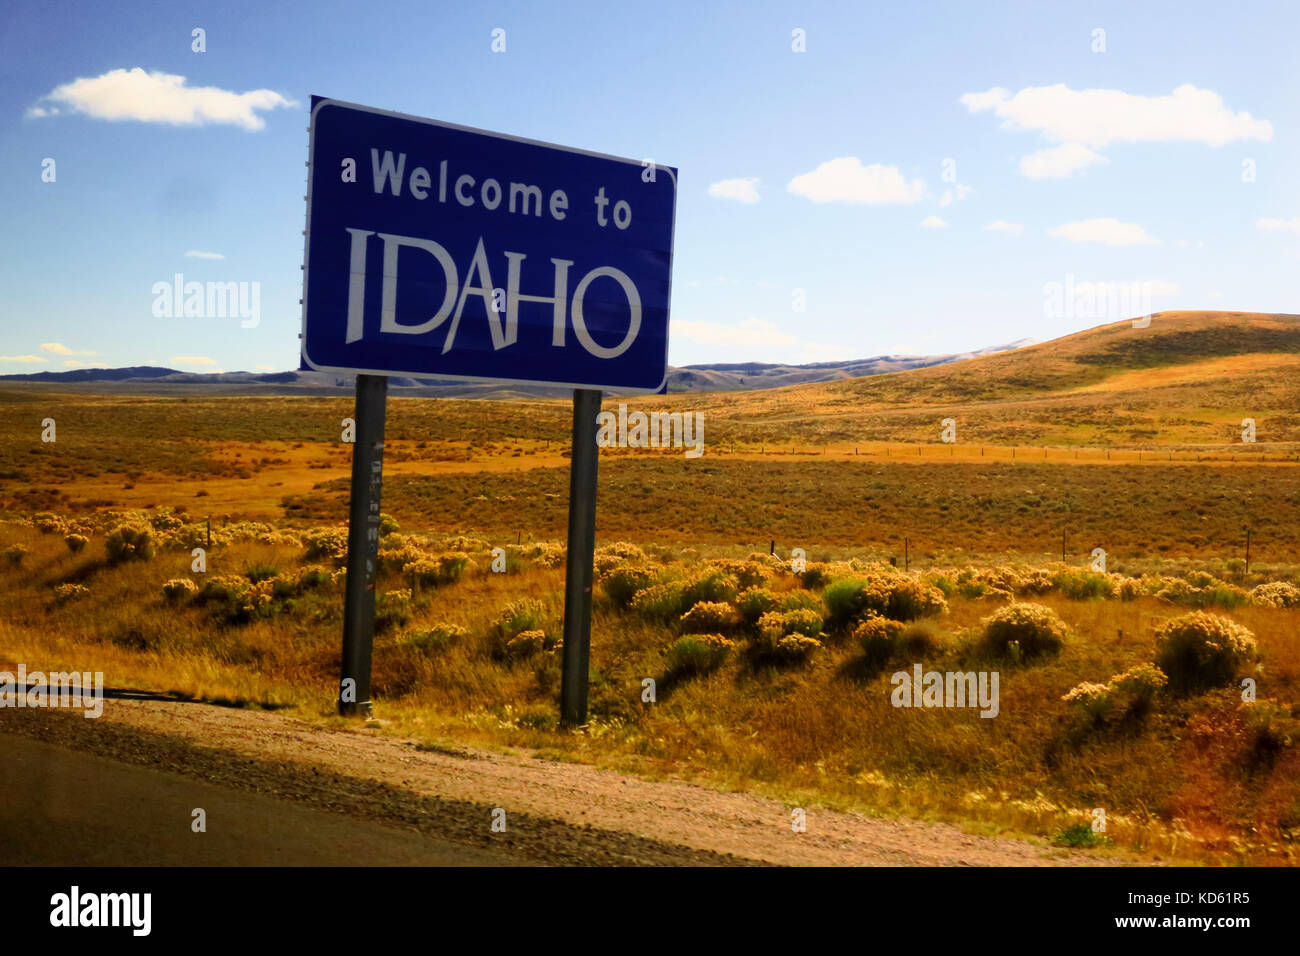 Welcome to Idaho sign. Stock Photo